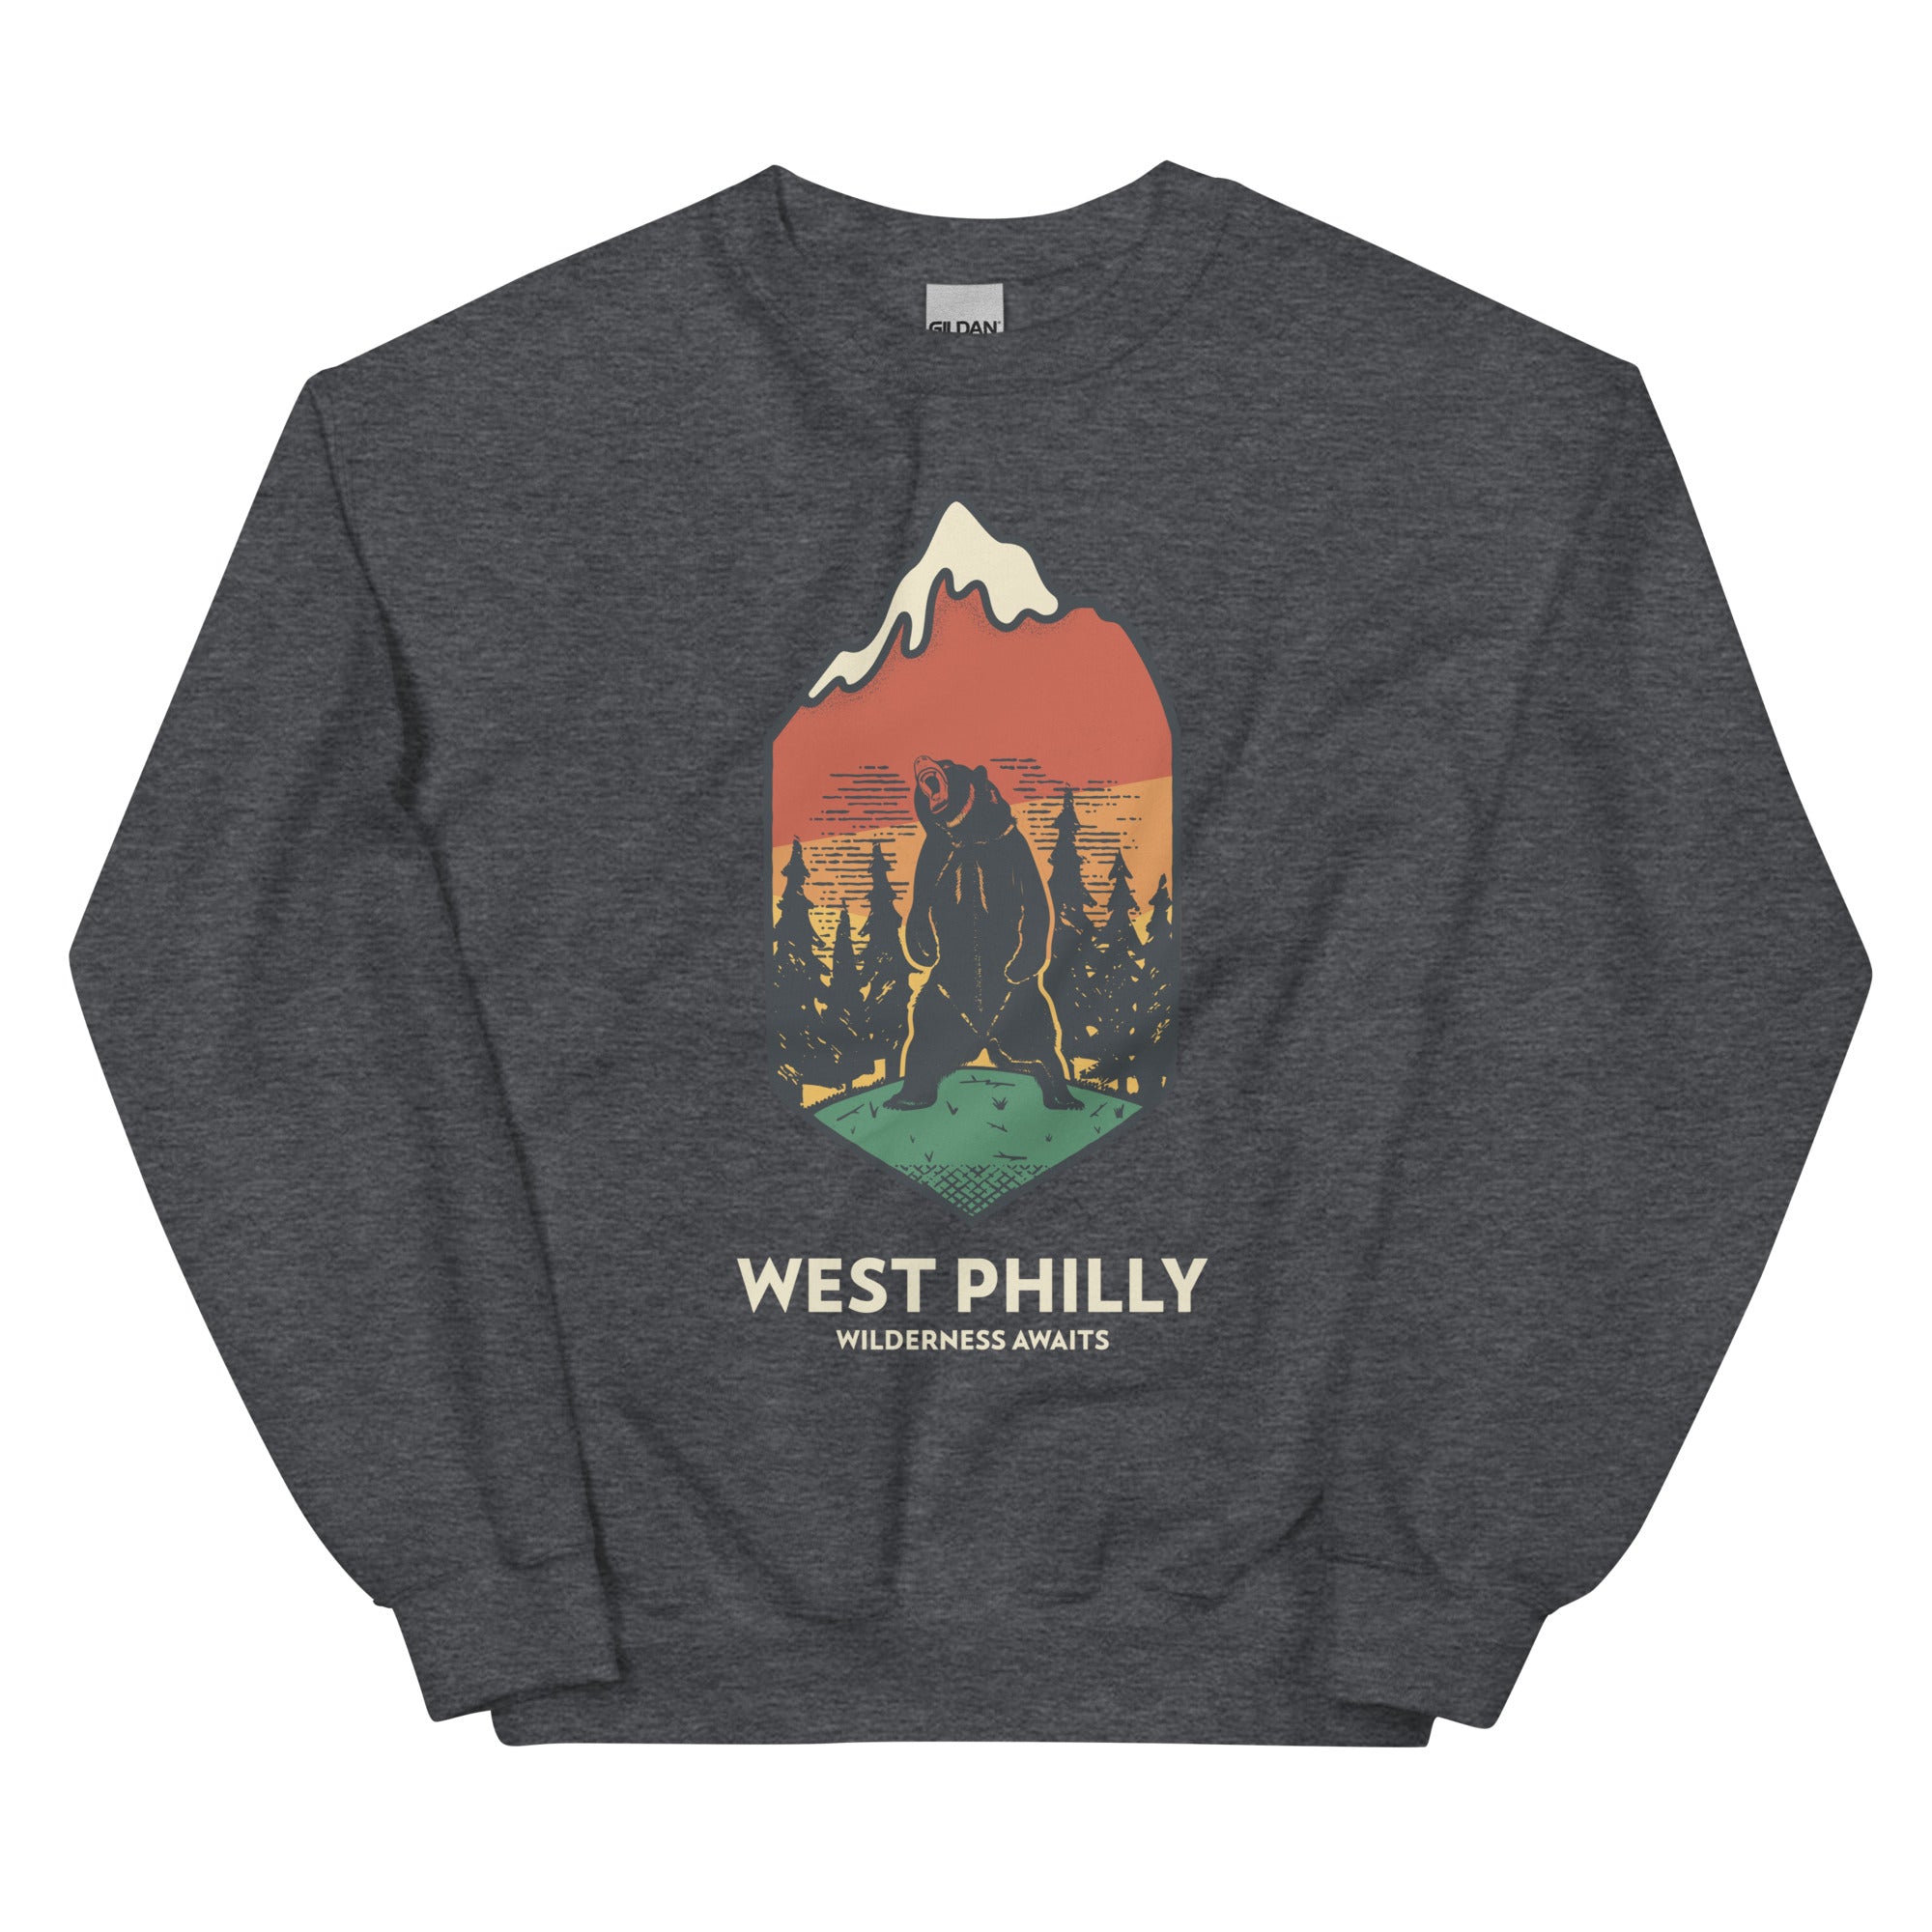 West Philly Wilderness Philadelphia outdoors dark heather grey sweatshirt Phillygoat